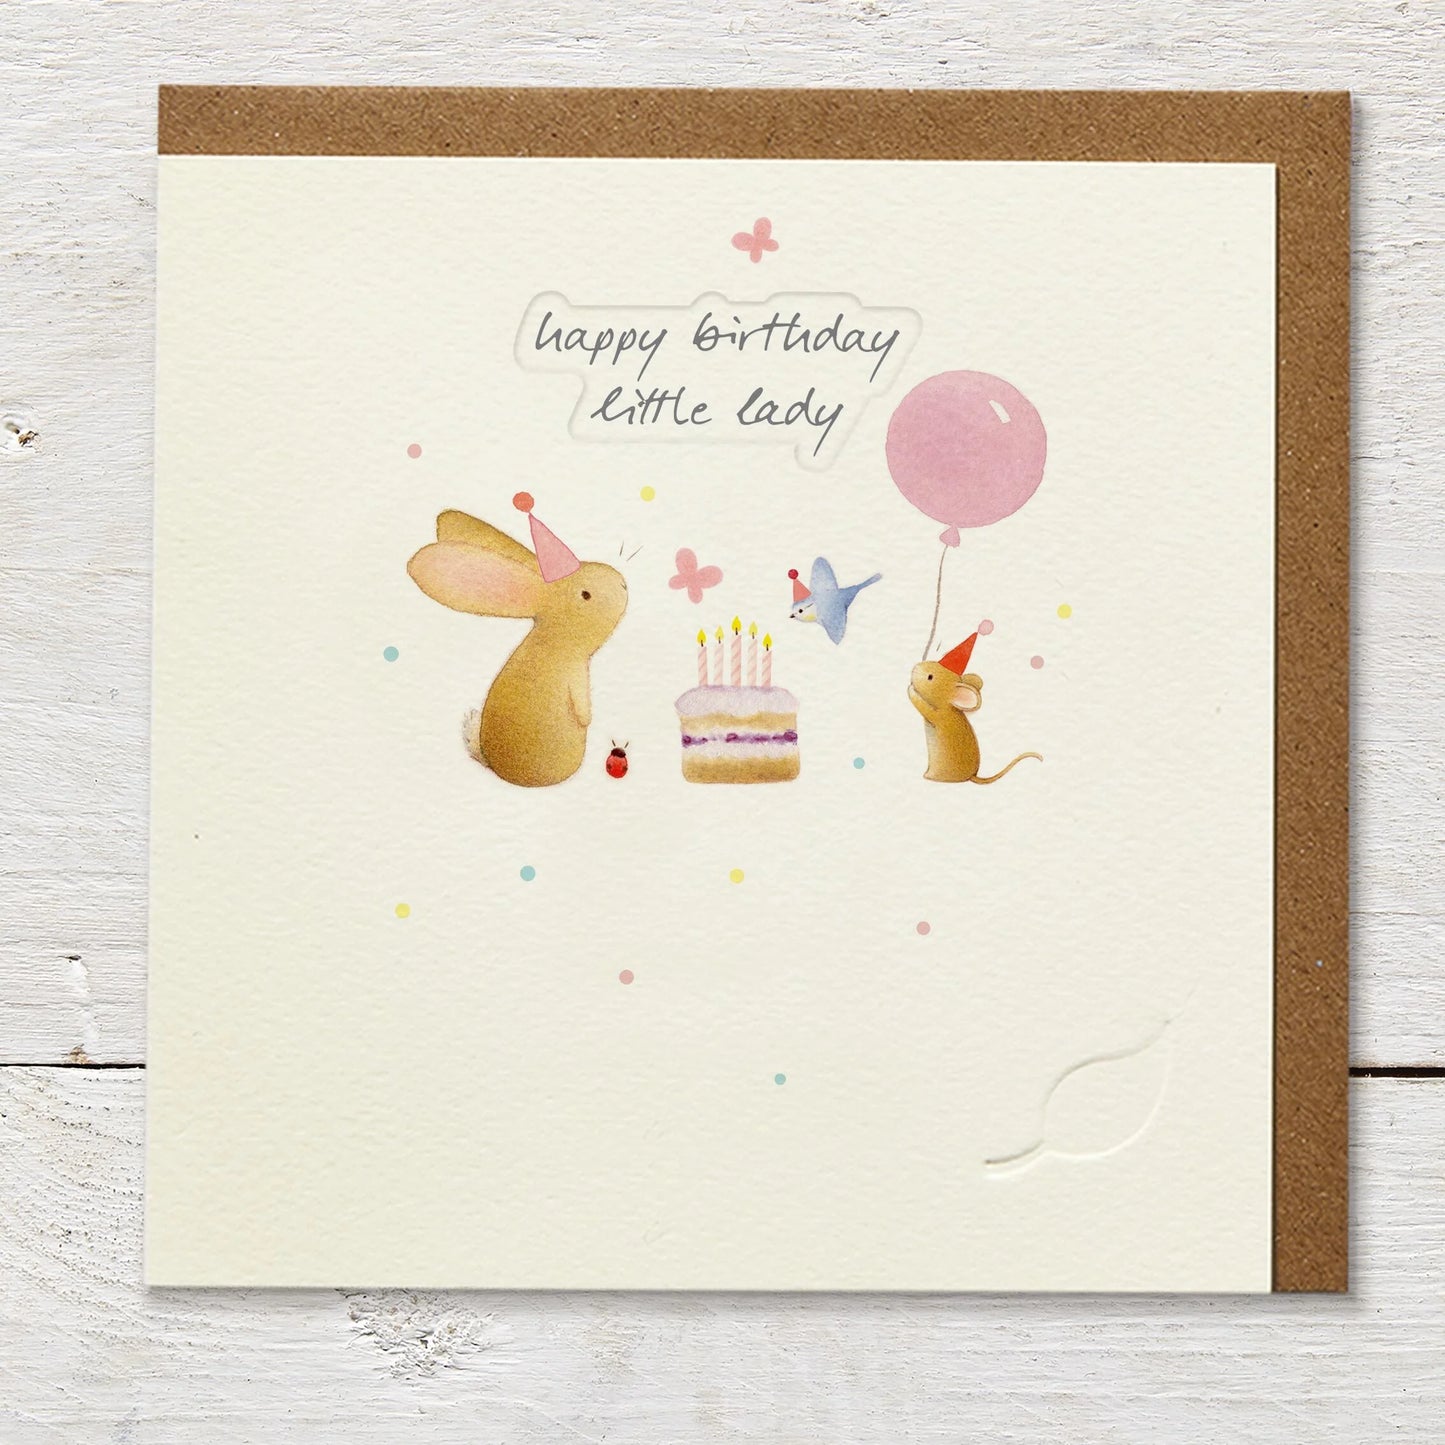 Happy Birthday Little Lady Greeting Card